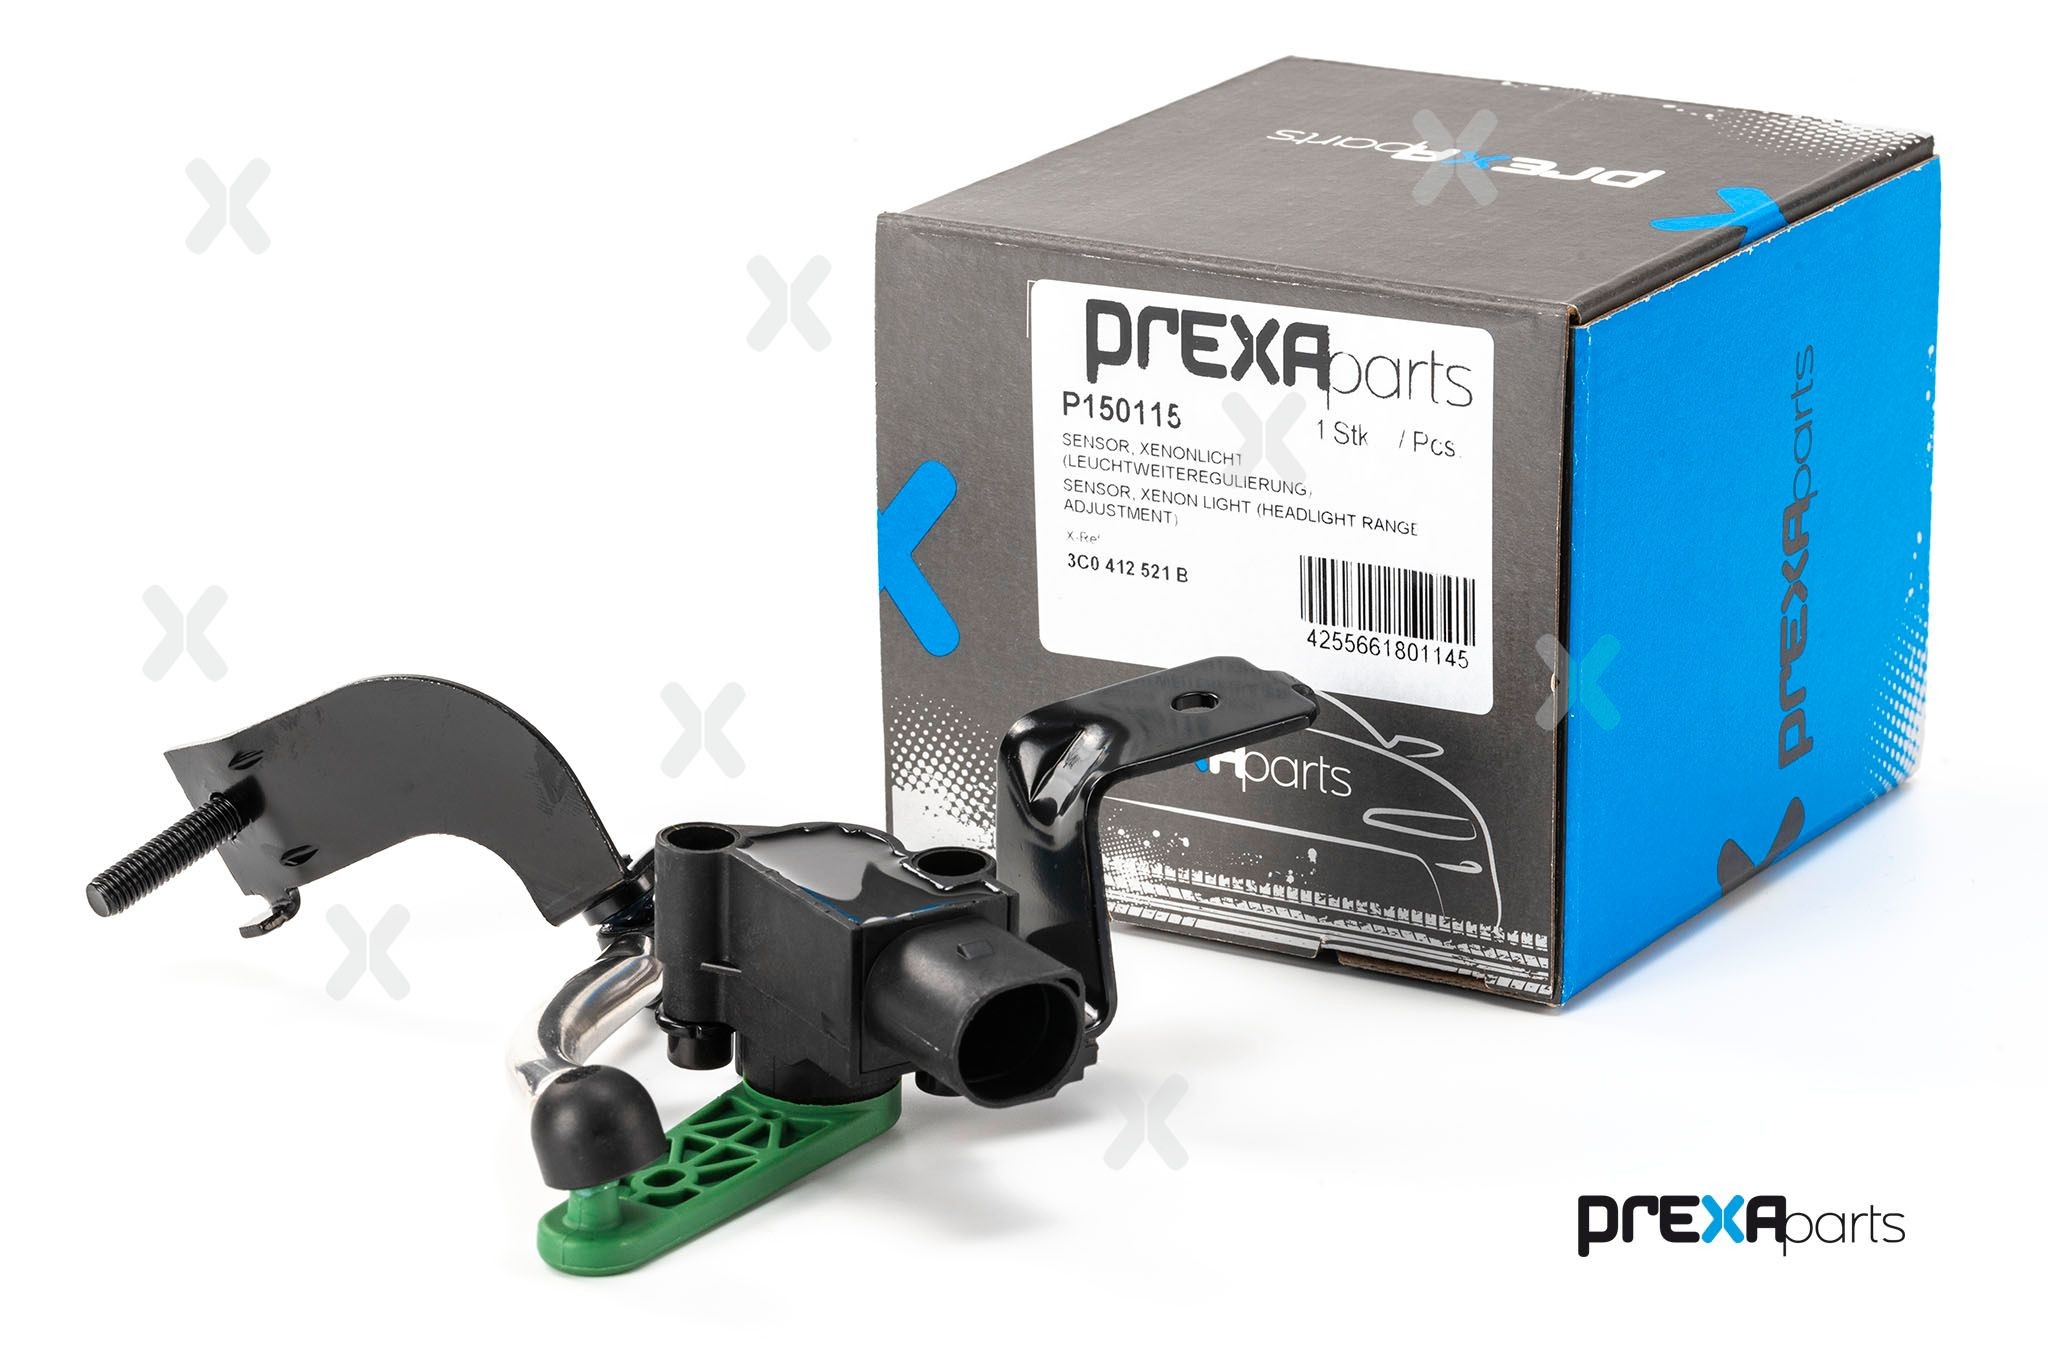 Sensor, Xenon light (headlight range adjustment) P150115 from PREXAparts